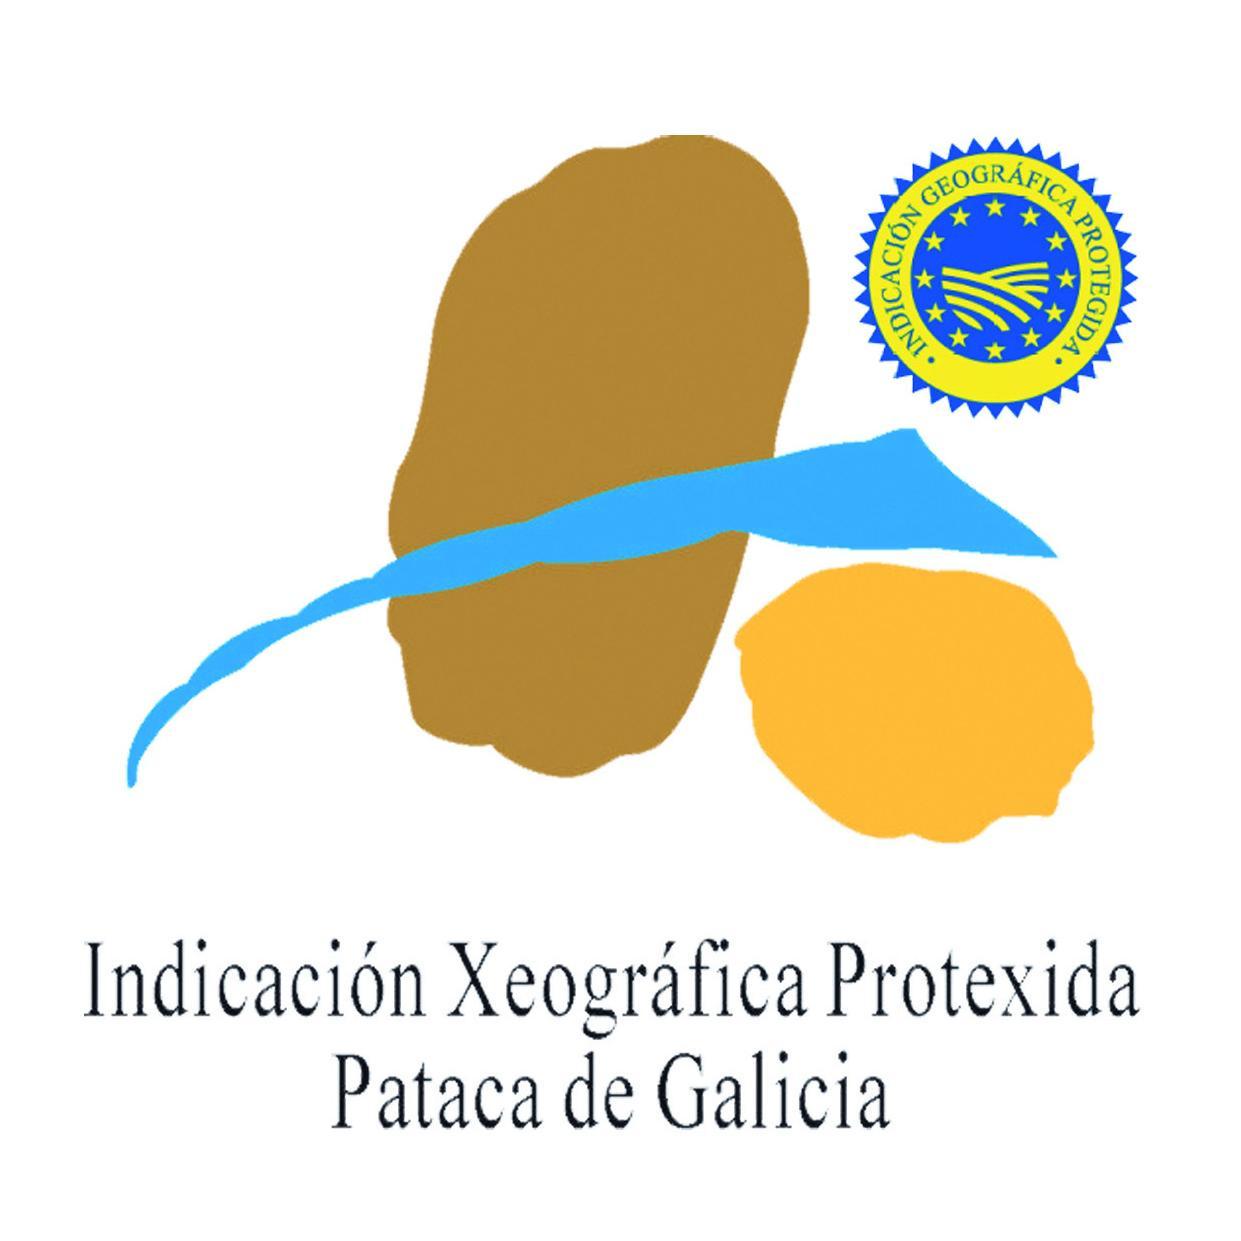 Páxina oficial da Indicación Xeográfica Protexida #Pataca de #Galicia #patatadegalicia #patacadegalicia #agricultura #denominaciones #calidad #alimentación #igp